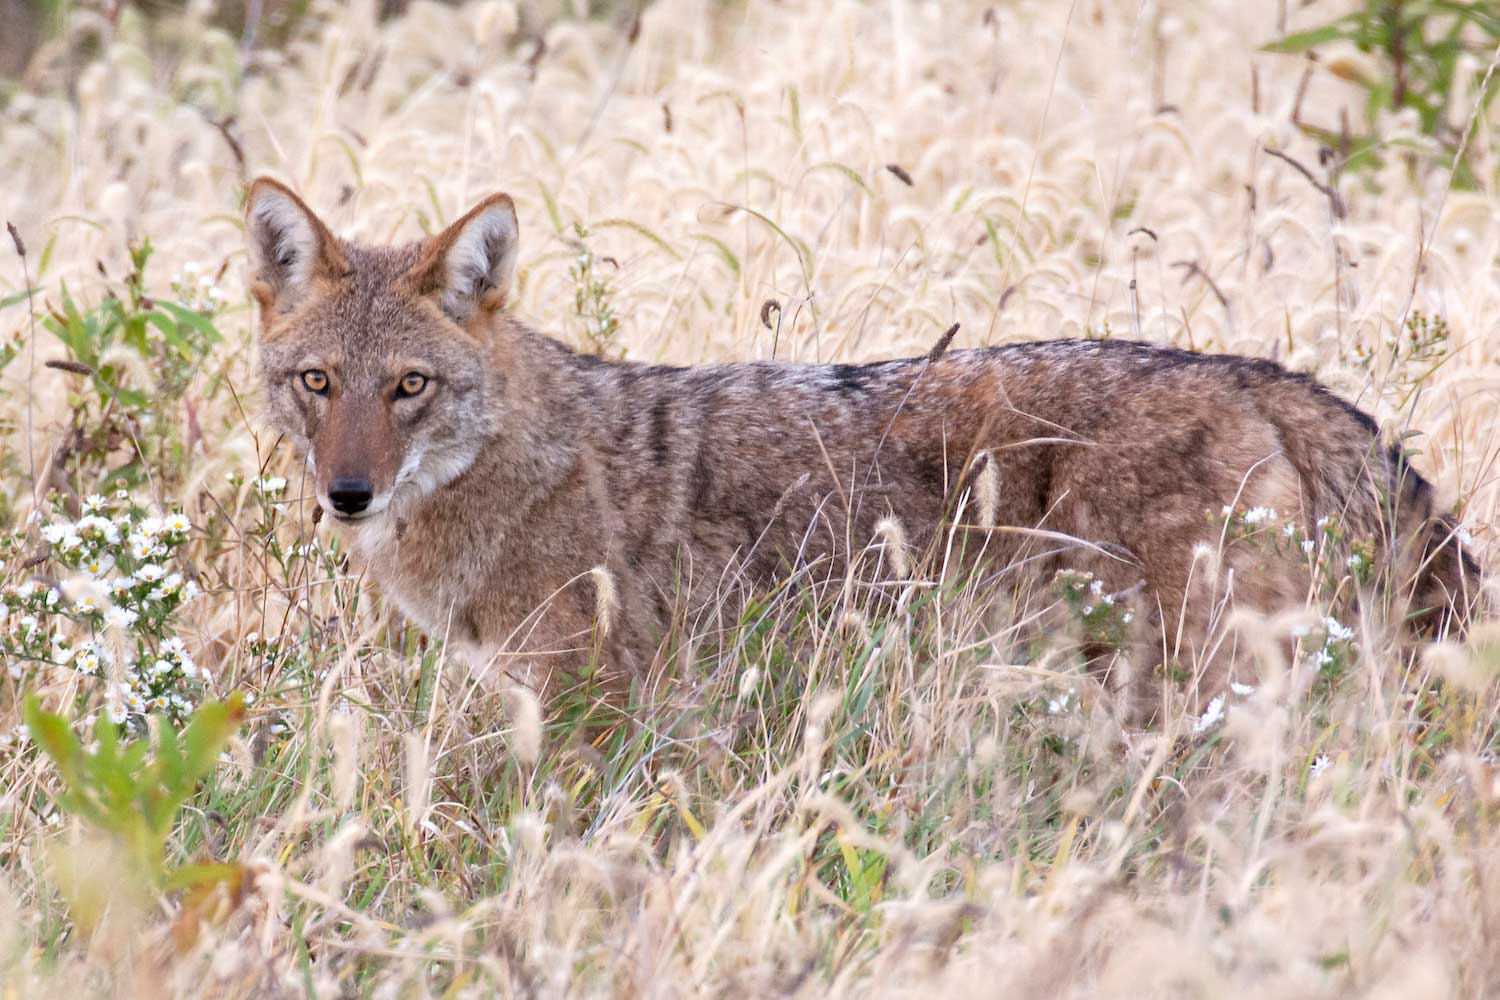 A coyote walking through long grass.